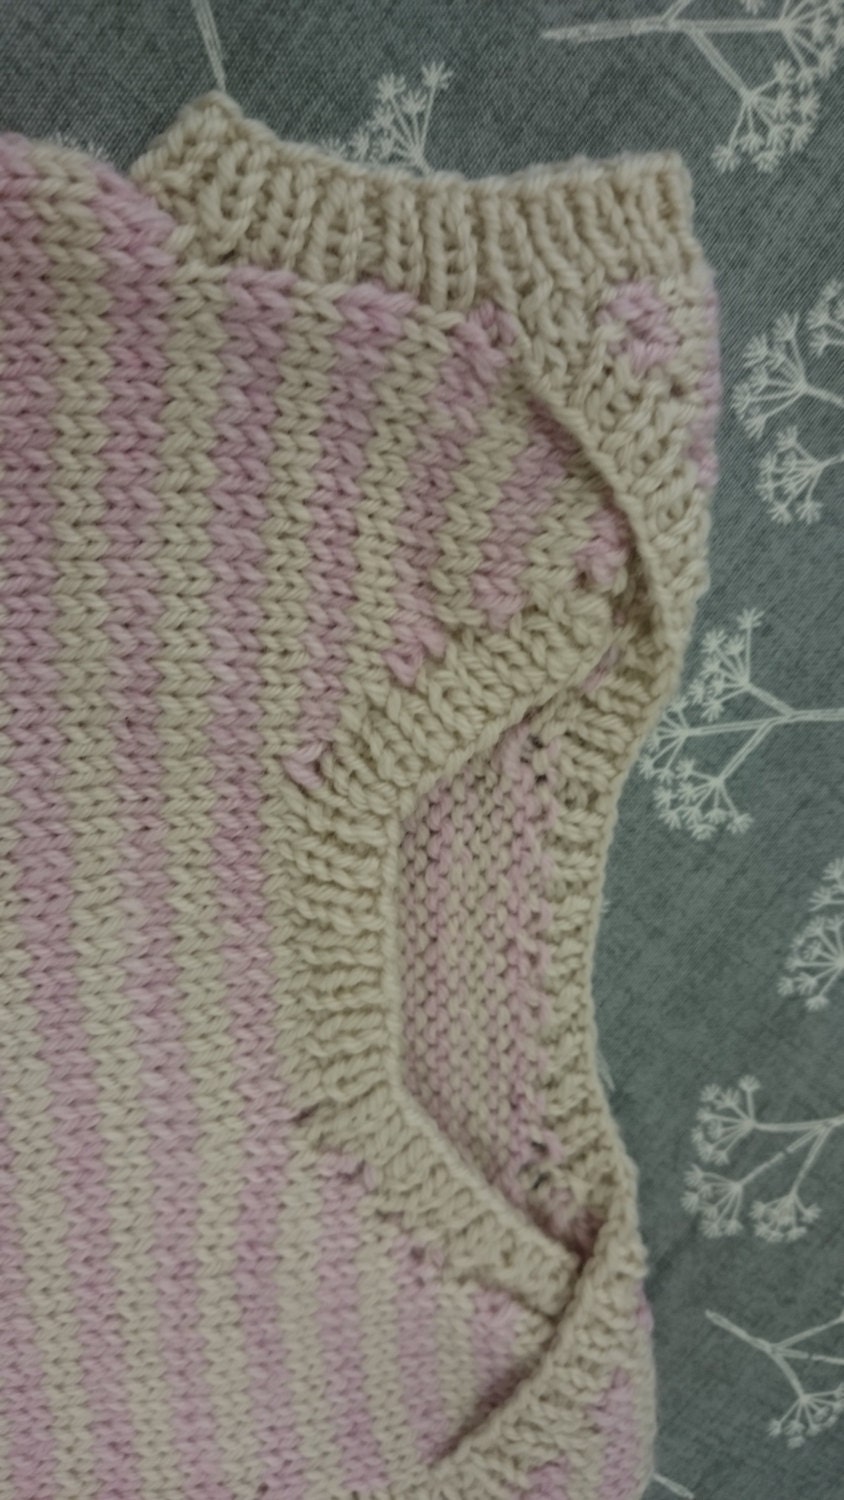 Baby Onesie and Socks Knitting Pattern - Etsy New Zealand